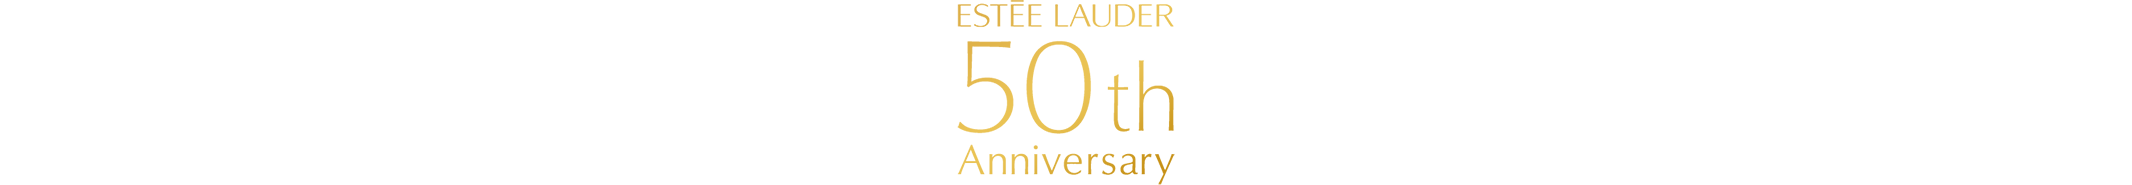 ESTEE LAUDER 50th Anniversary